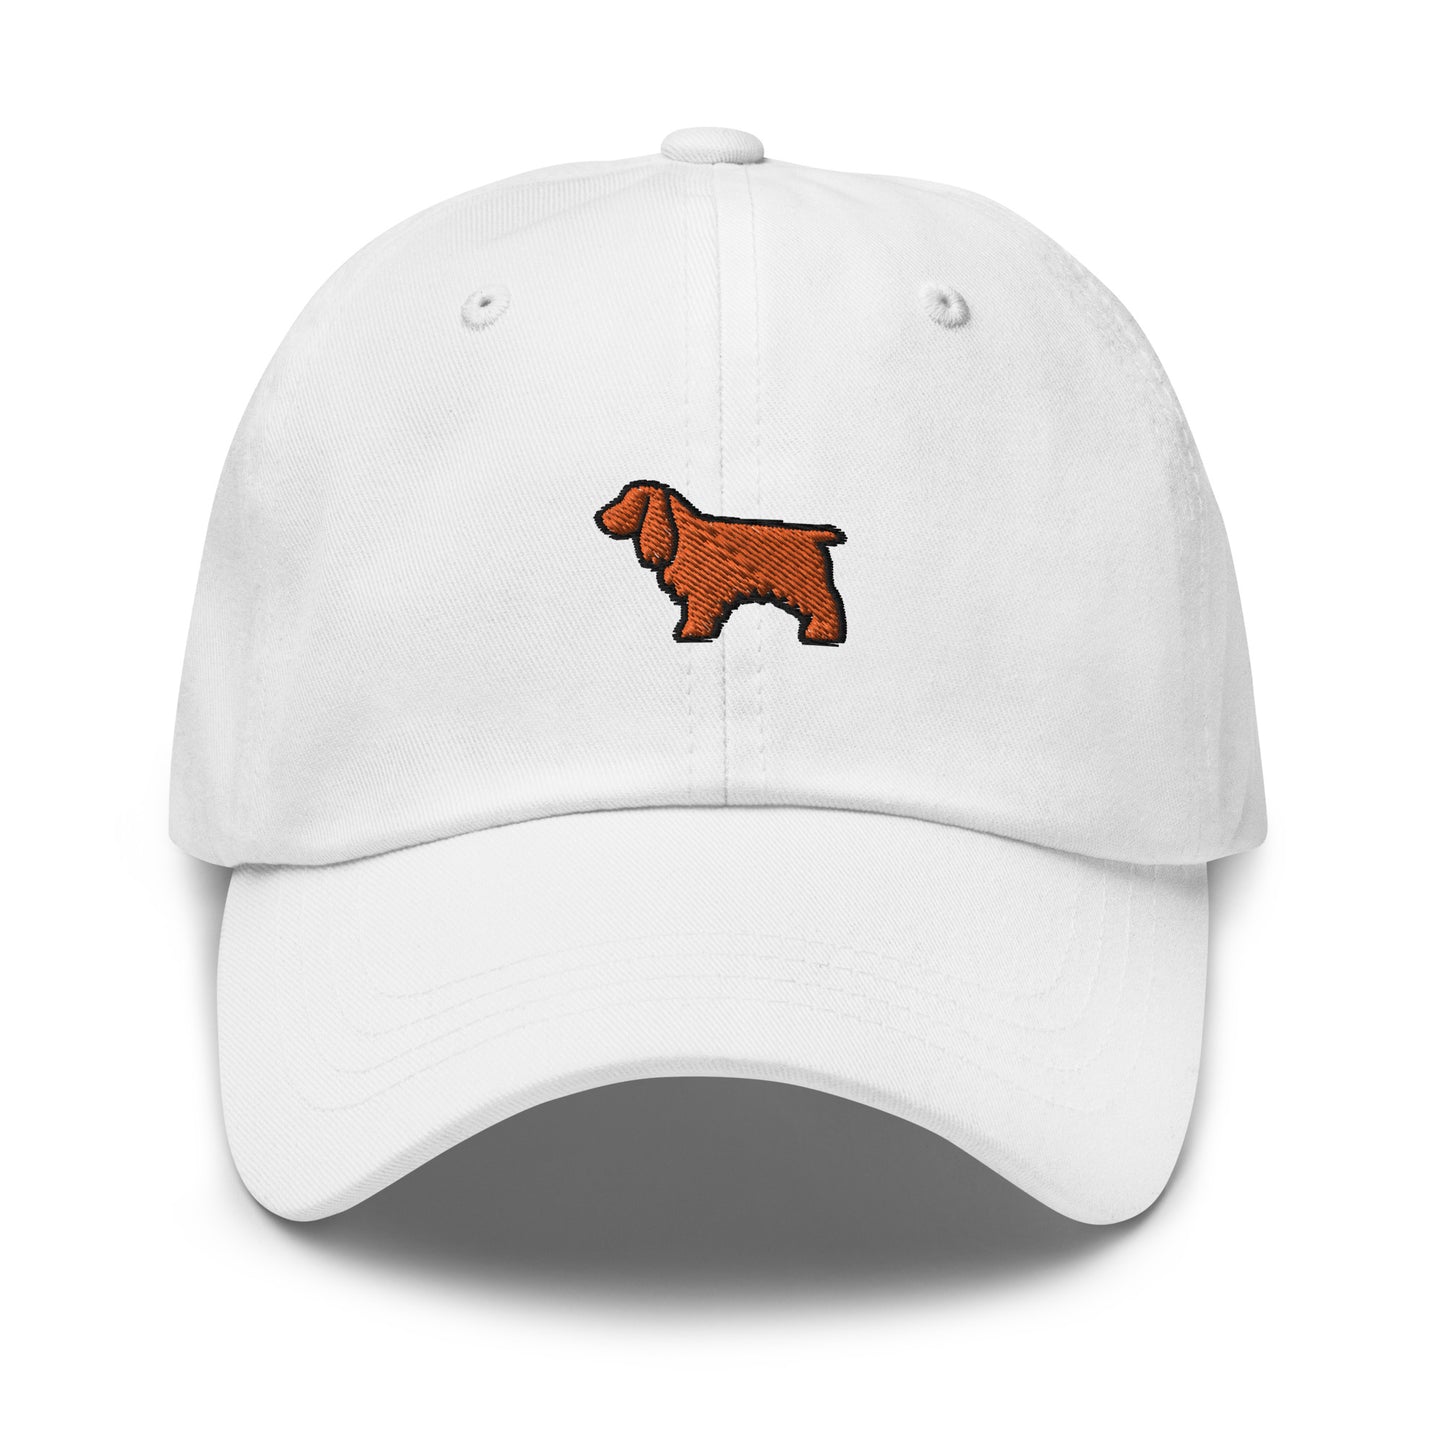 Cocker Spaniel Dog Embroidered Baseball Cap